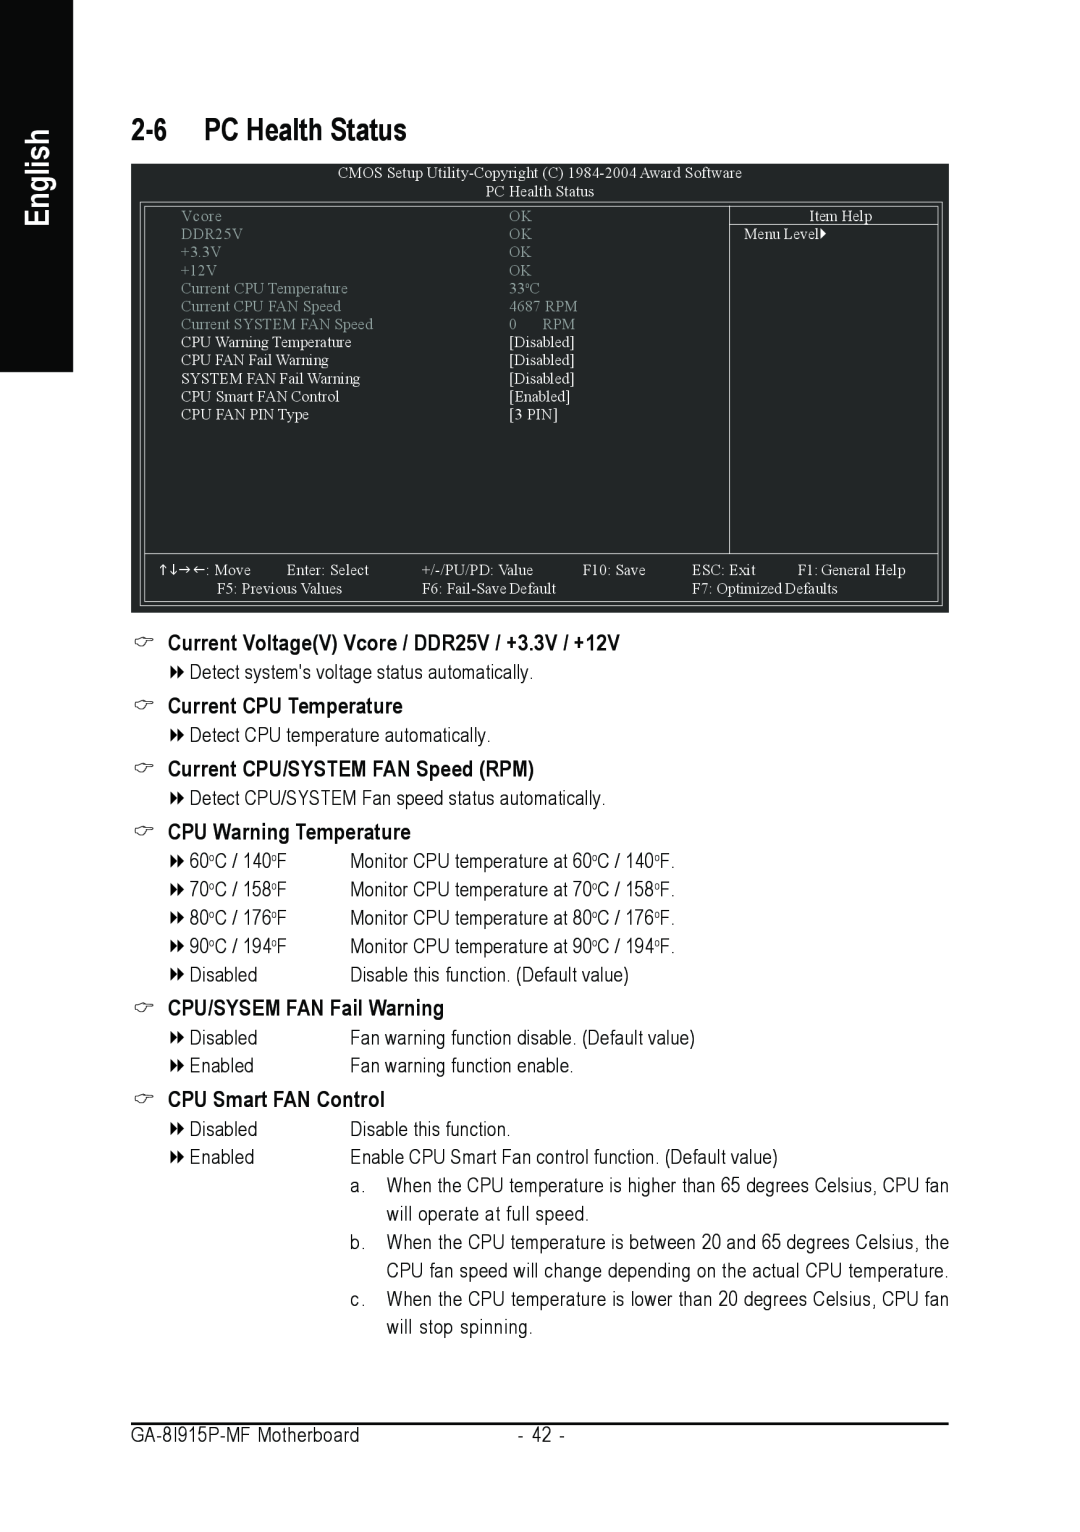 Gigabyte GA-8I915P-MF PC Health Status, Current VoltageV Vcore / DDR25V / +3.3V / +12V, Current CPU Temperature, English 